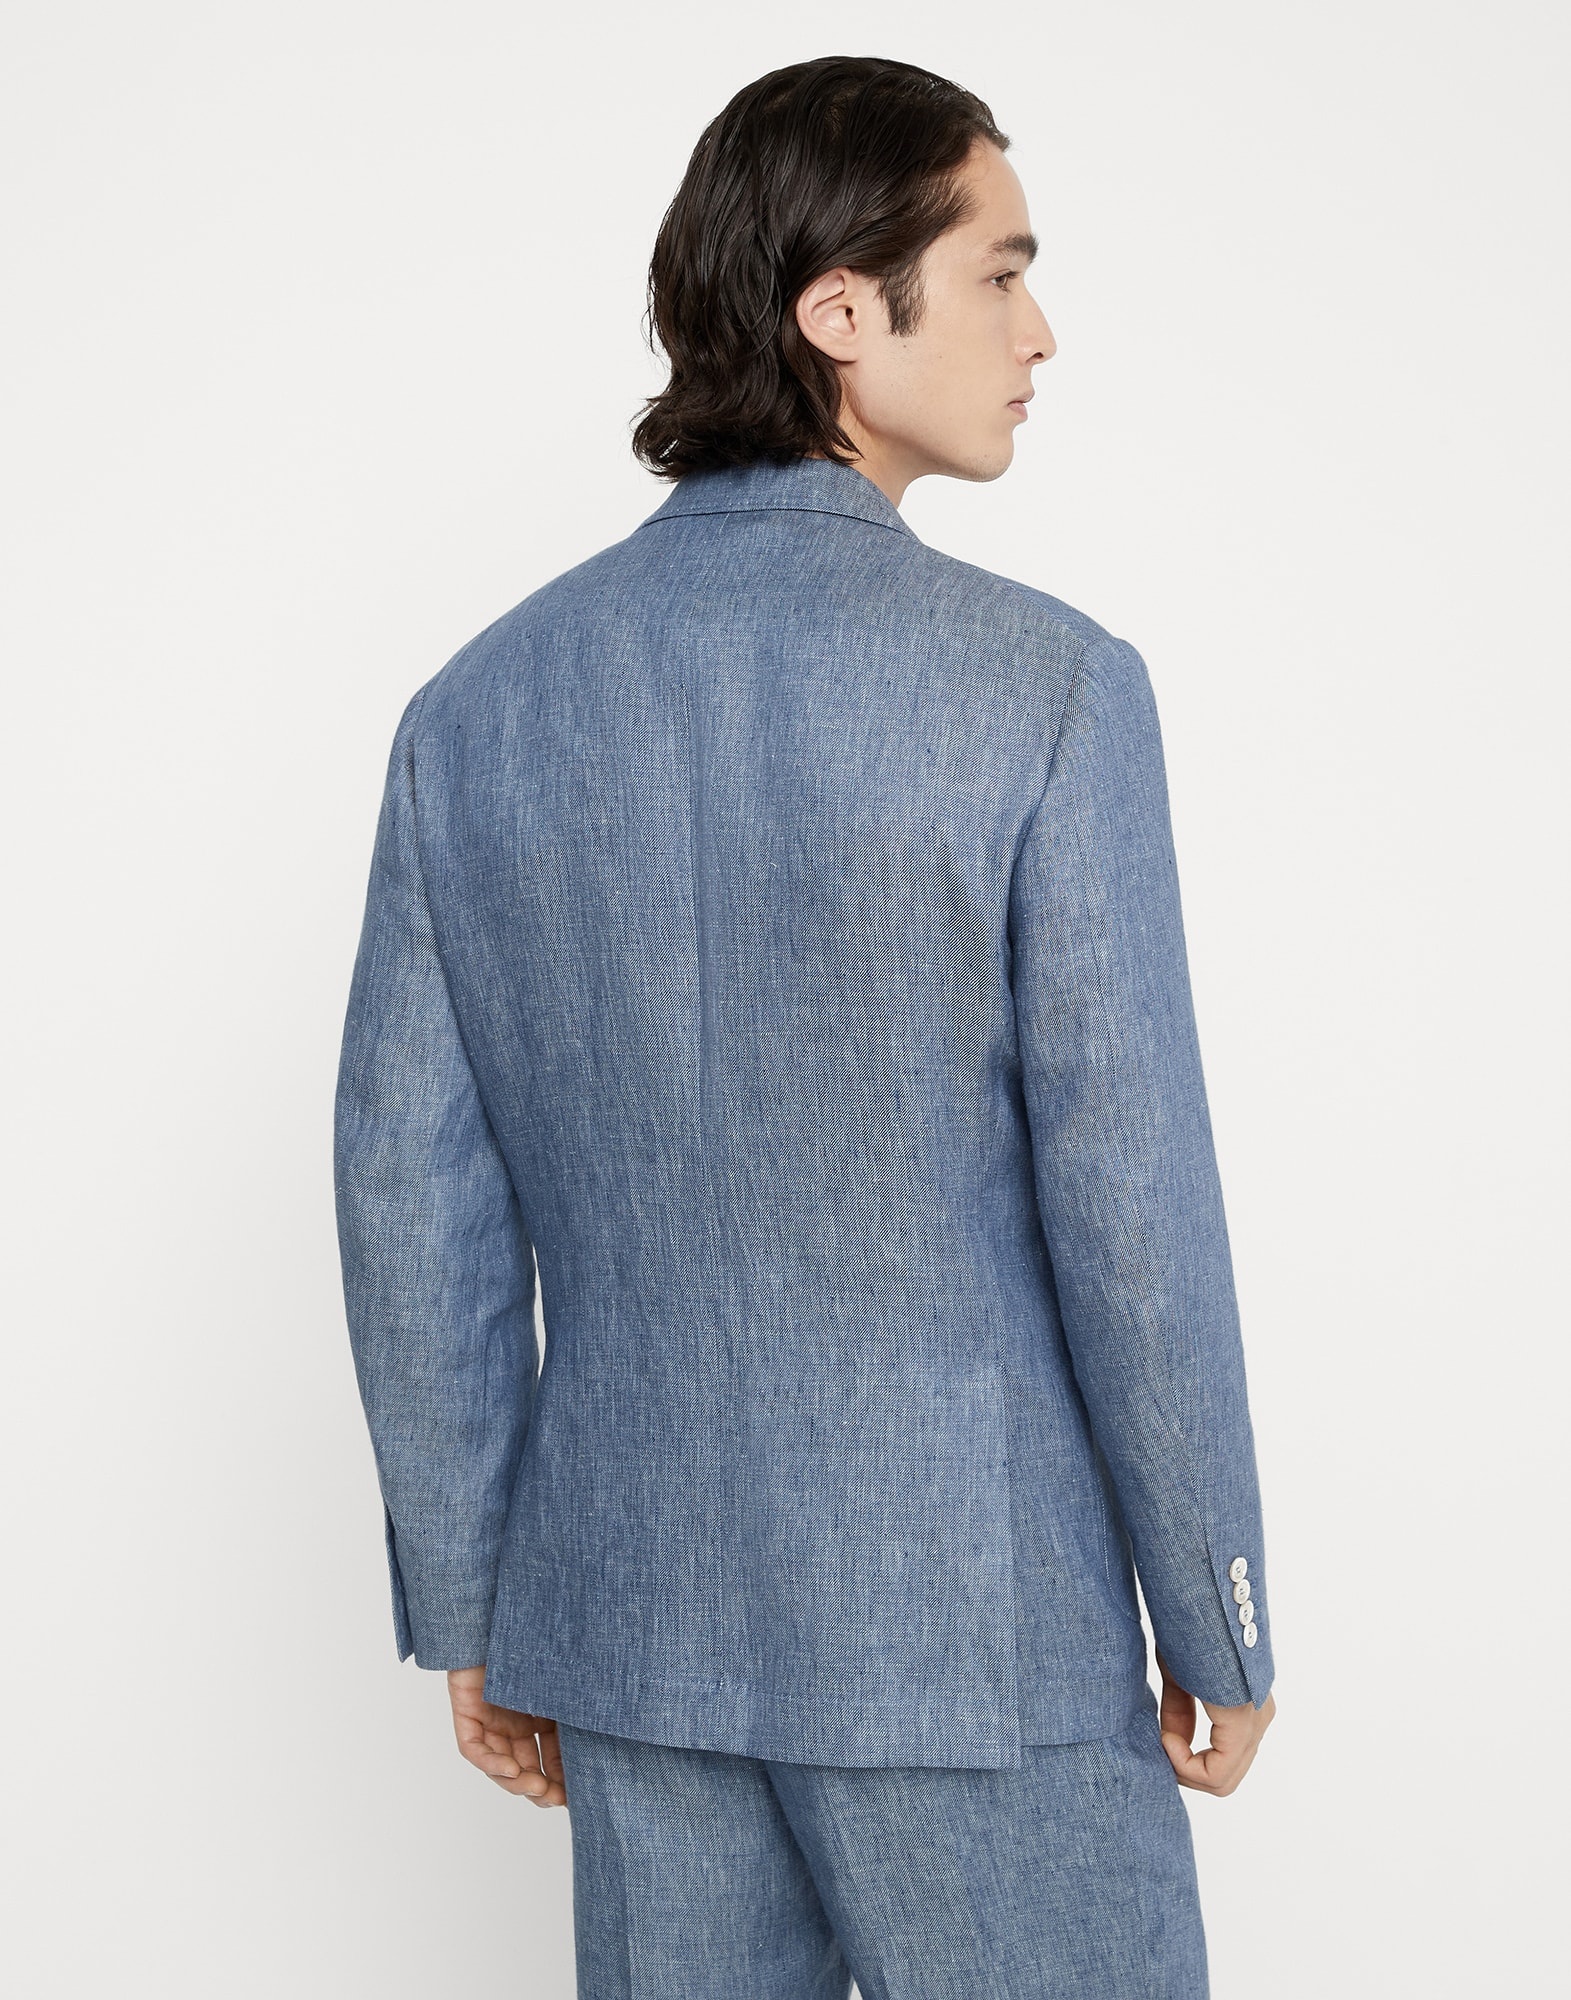 Denim-effect linen deconstructed blazer with patch pockets - 2